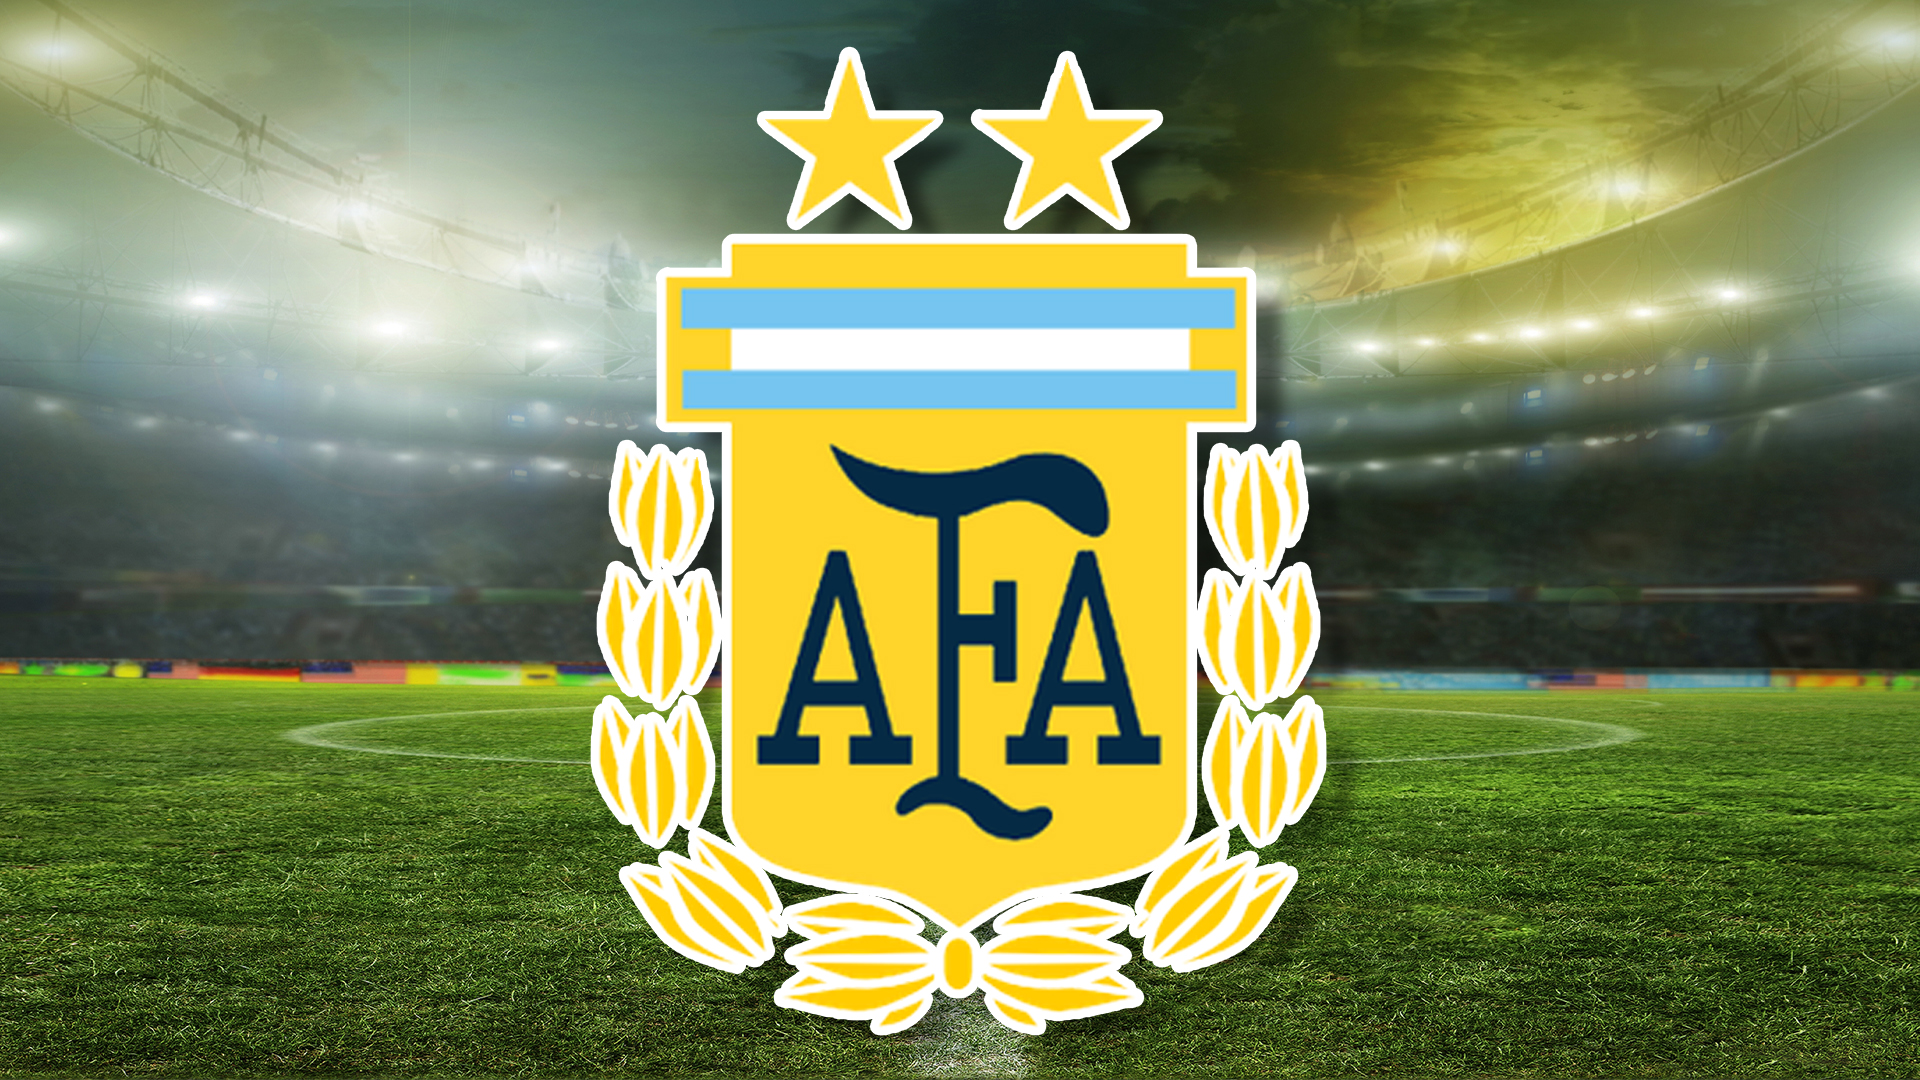 Argentina football badge